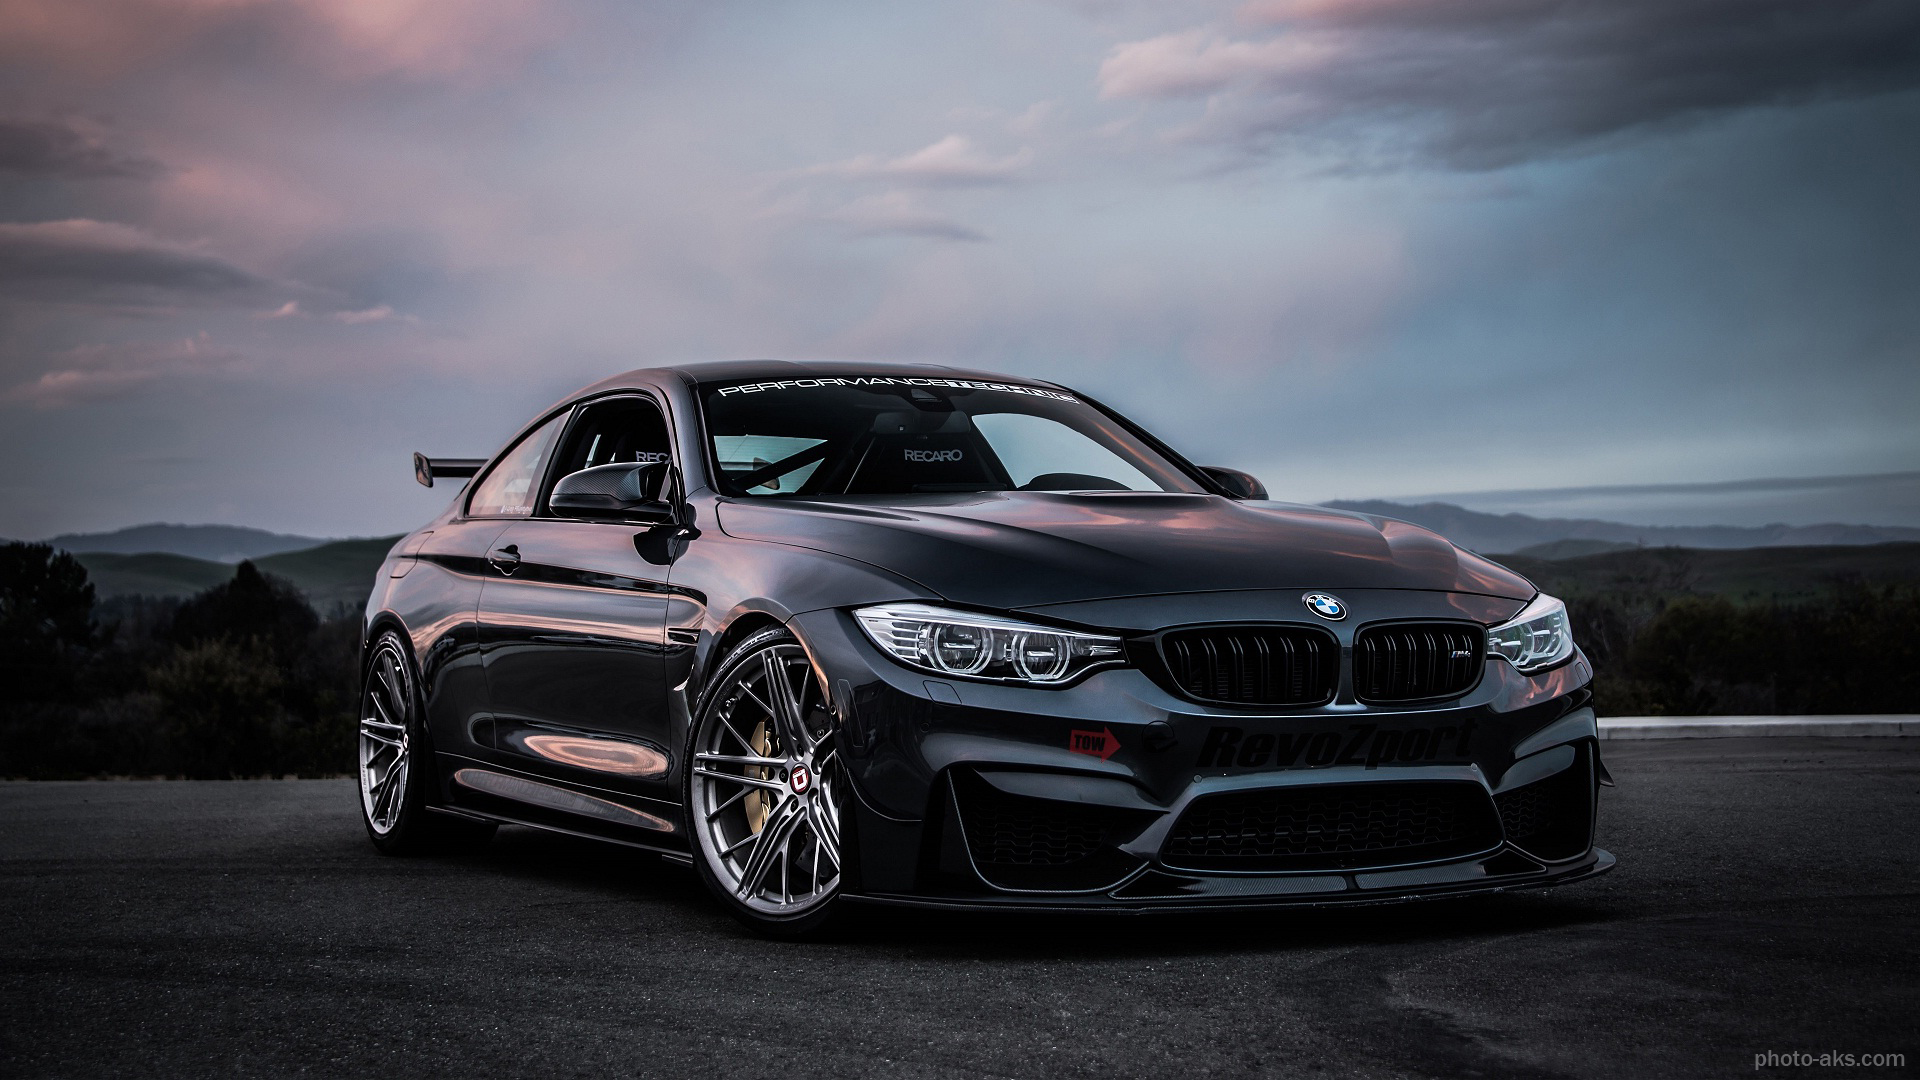 BMW-luxurious-black-car.jpg